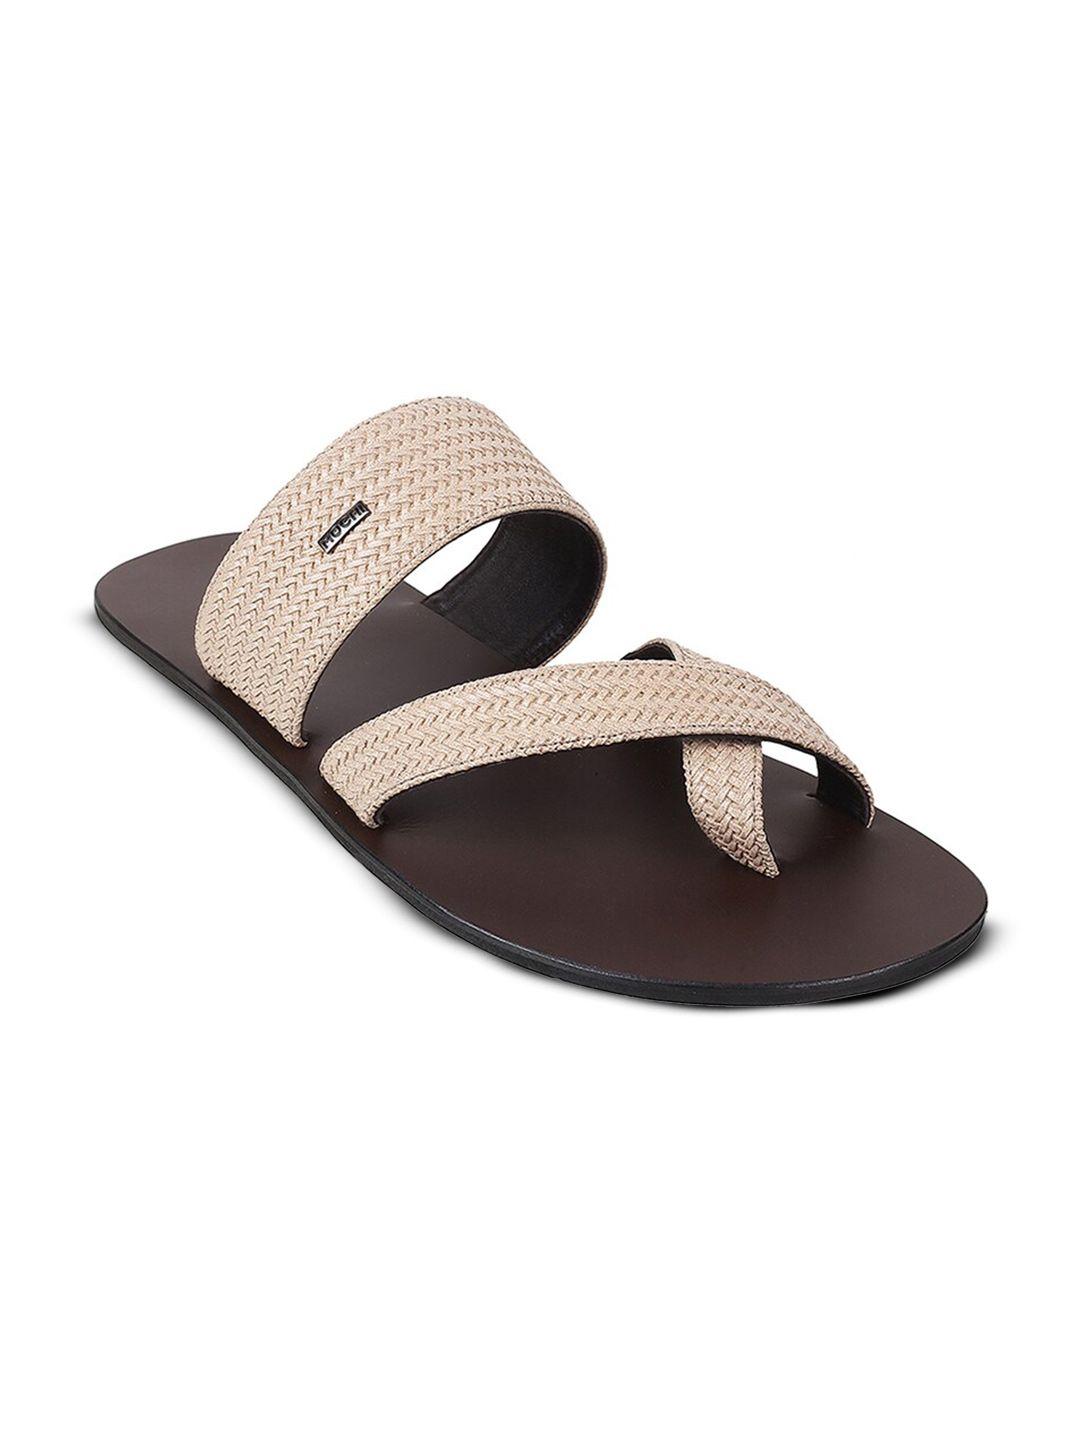 mochi synthetic comfort sandals